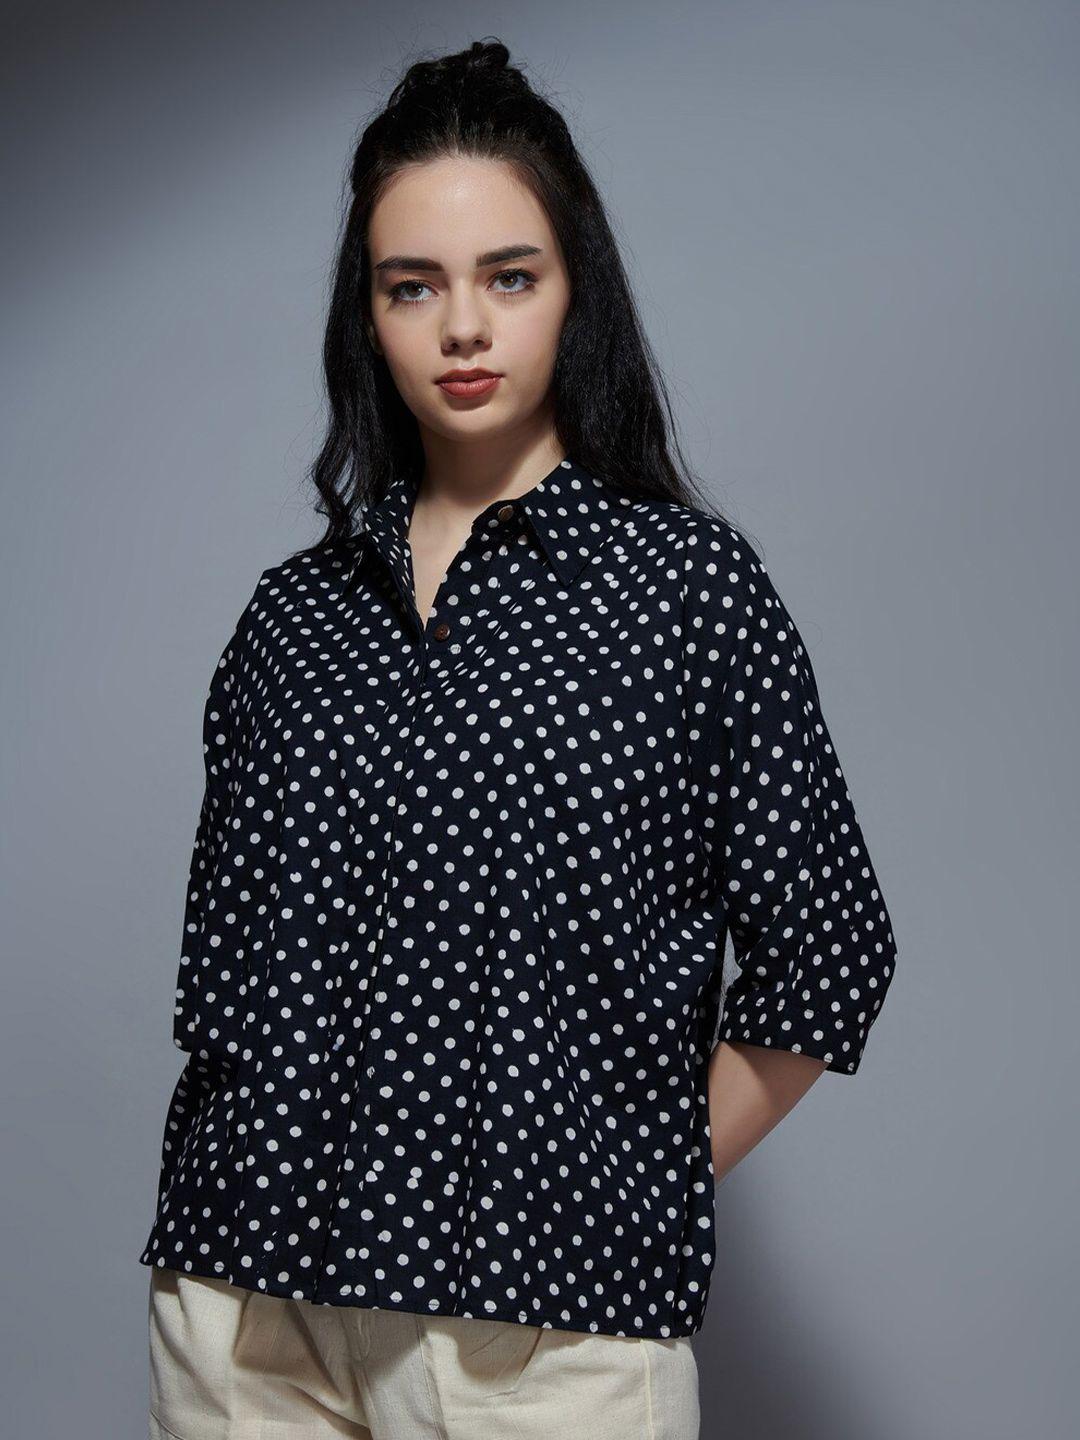 the kaatn trail black polka dot print shirt style cotton top